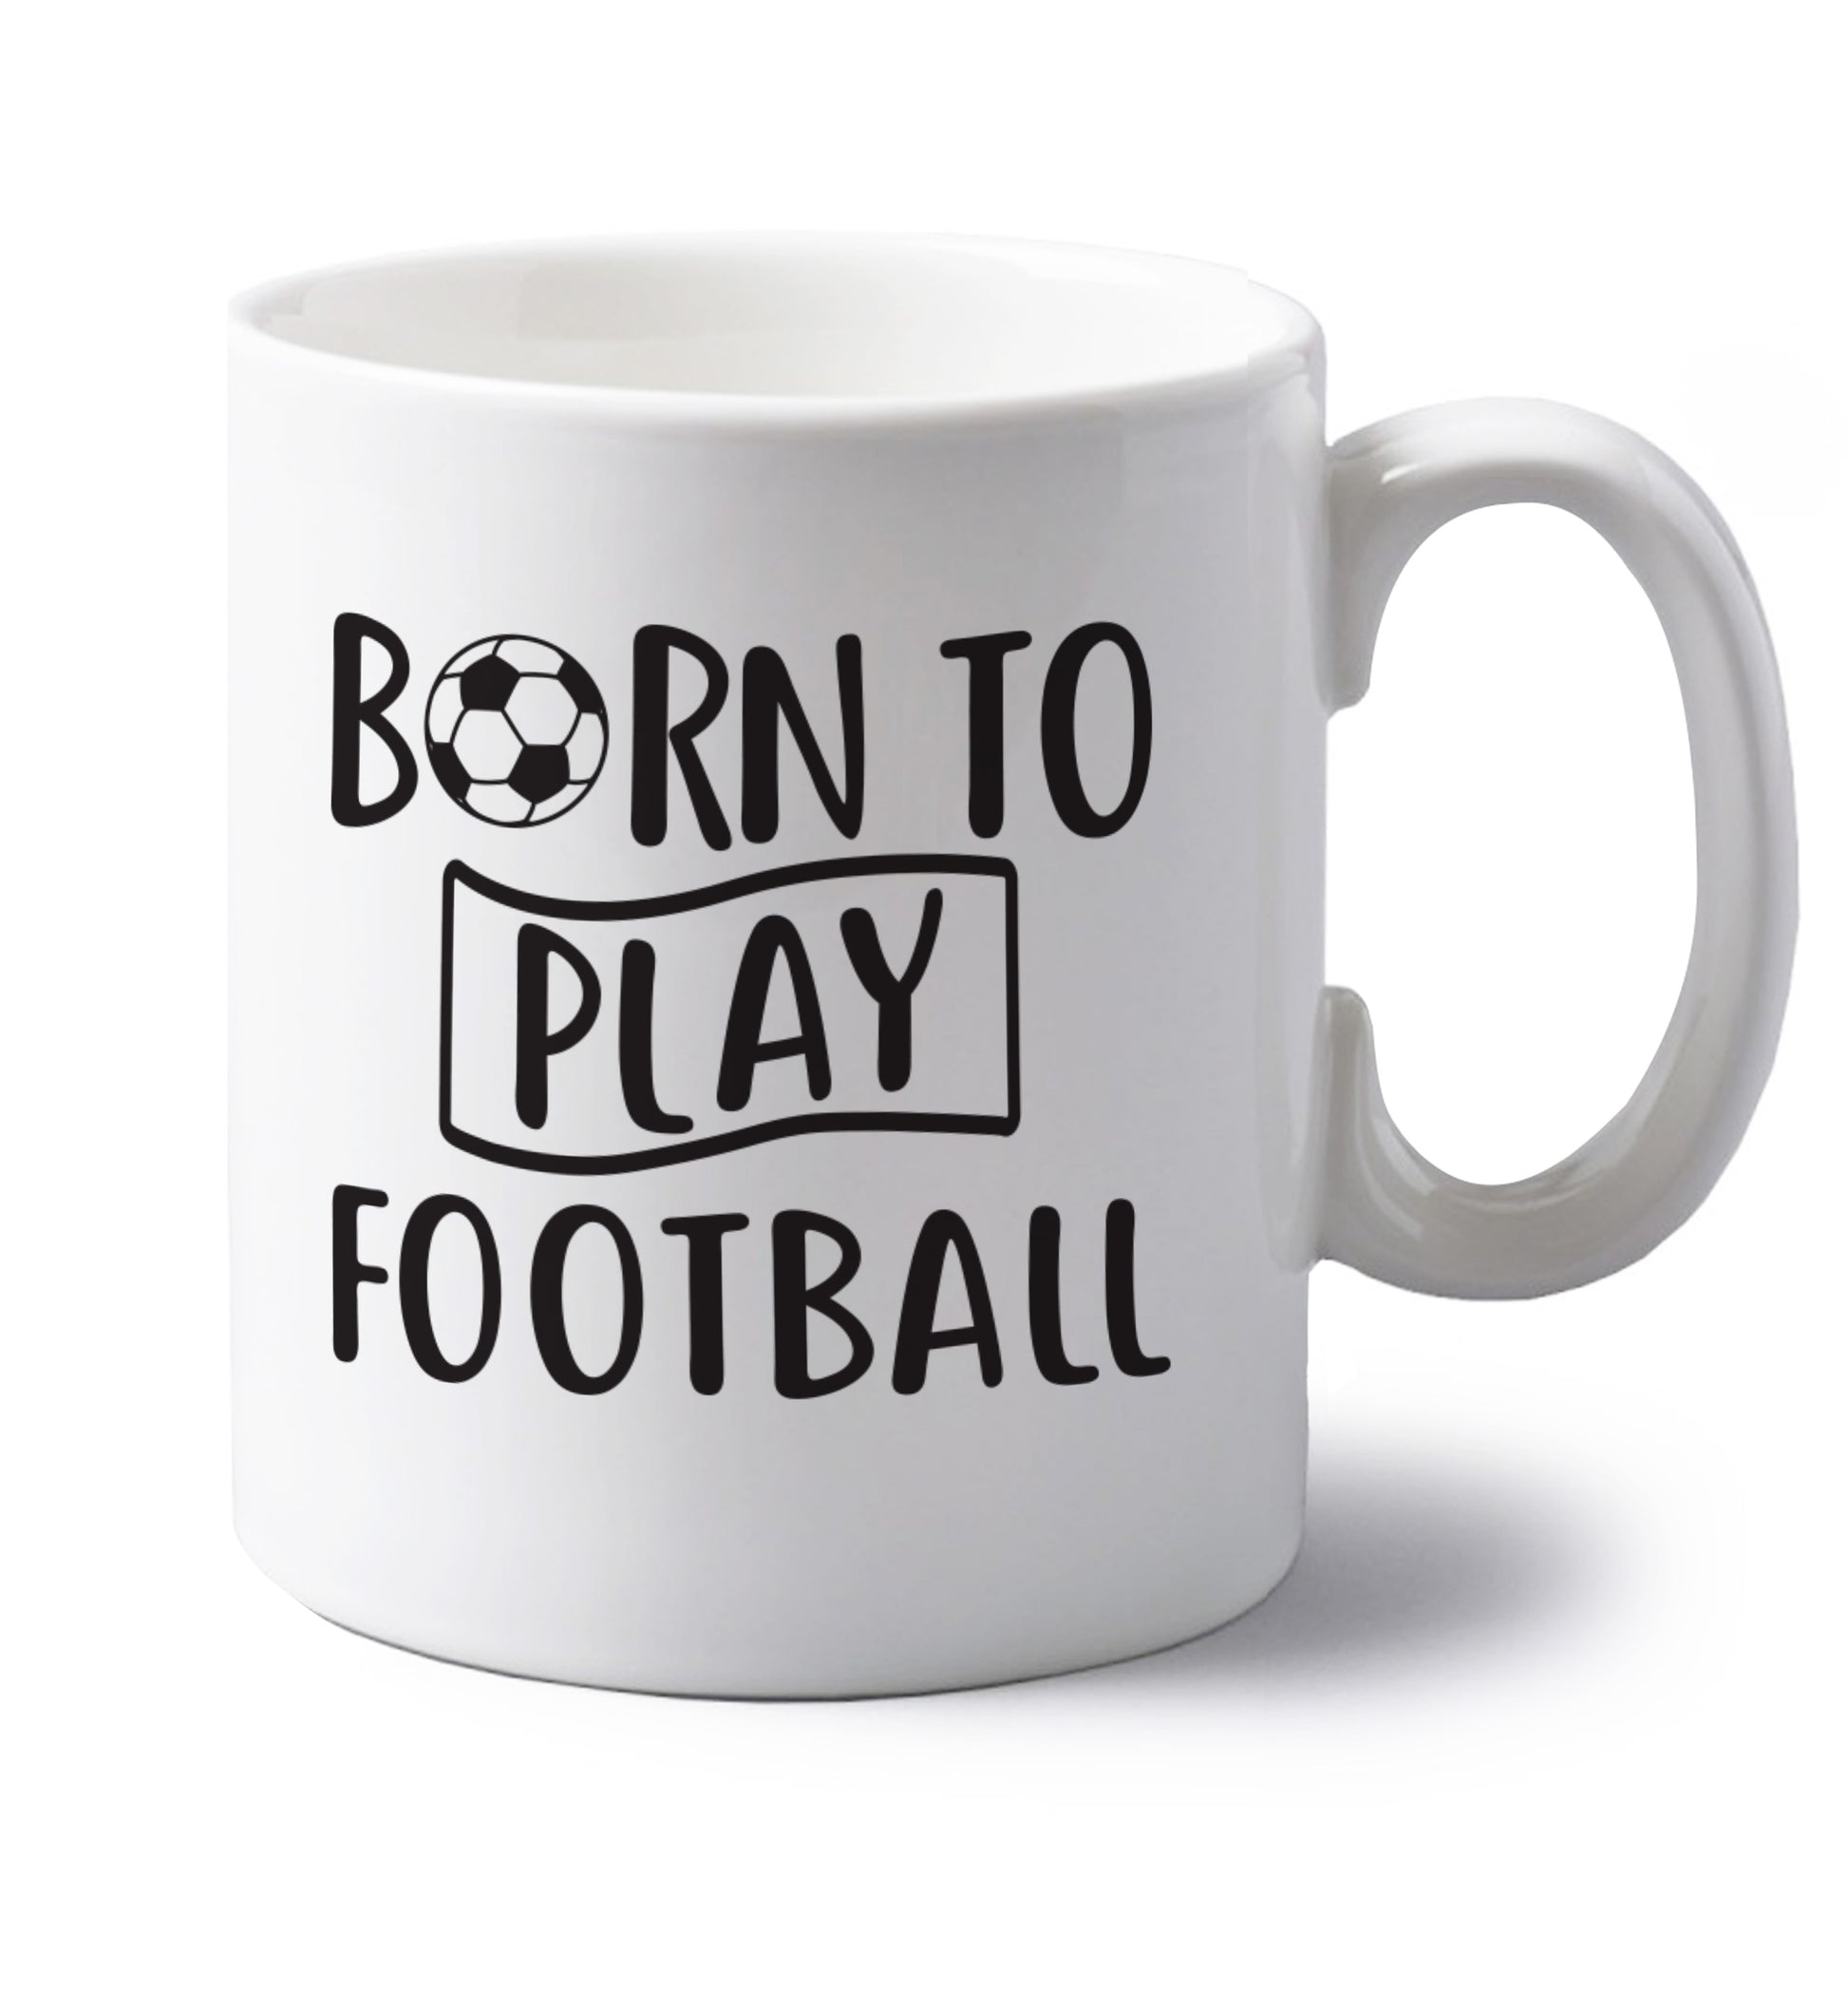 Born to play football left handed white ceramic mug 